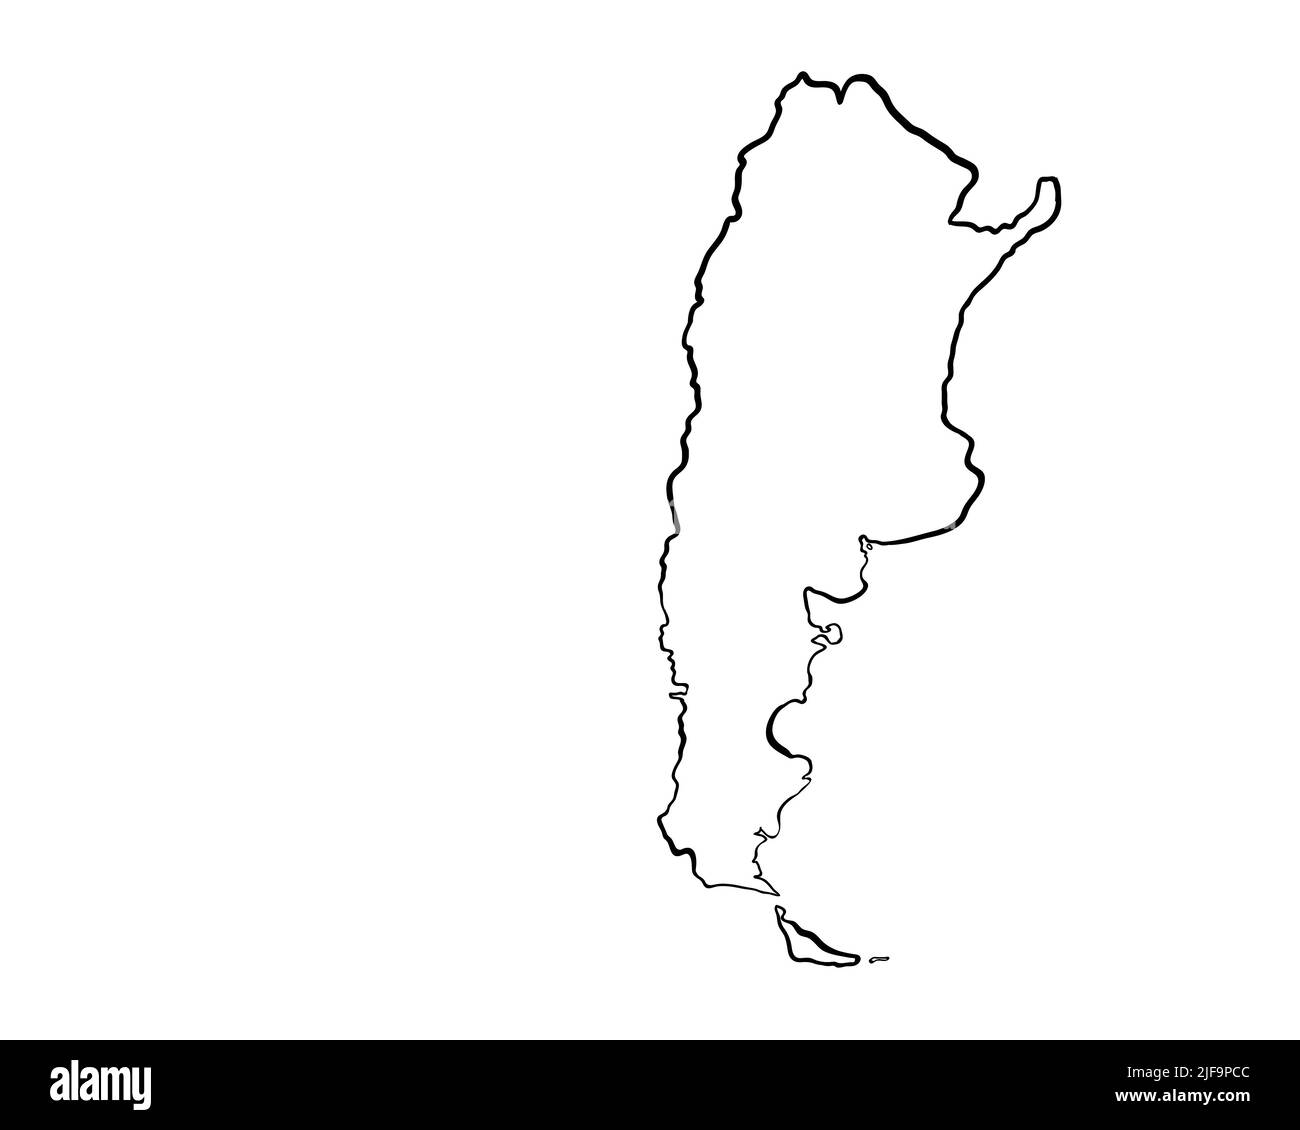 Argentina - Hand-Drawn Map lllustration Stock Photo